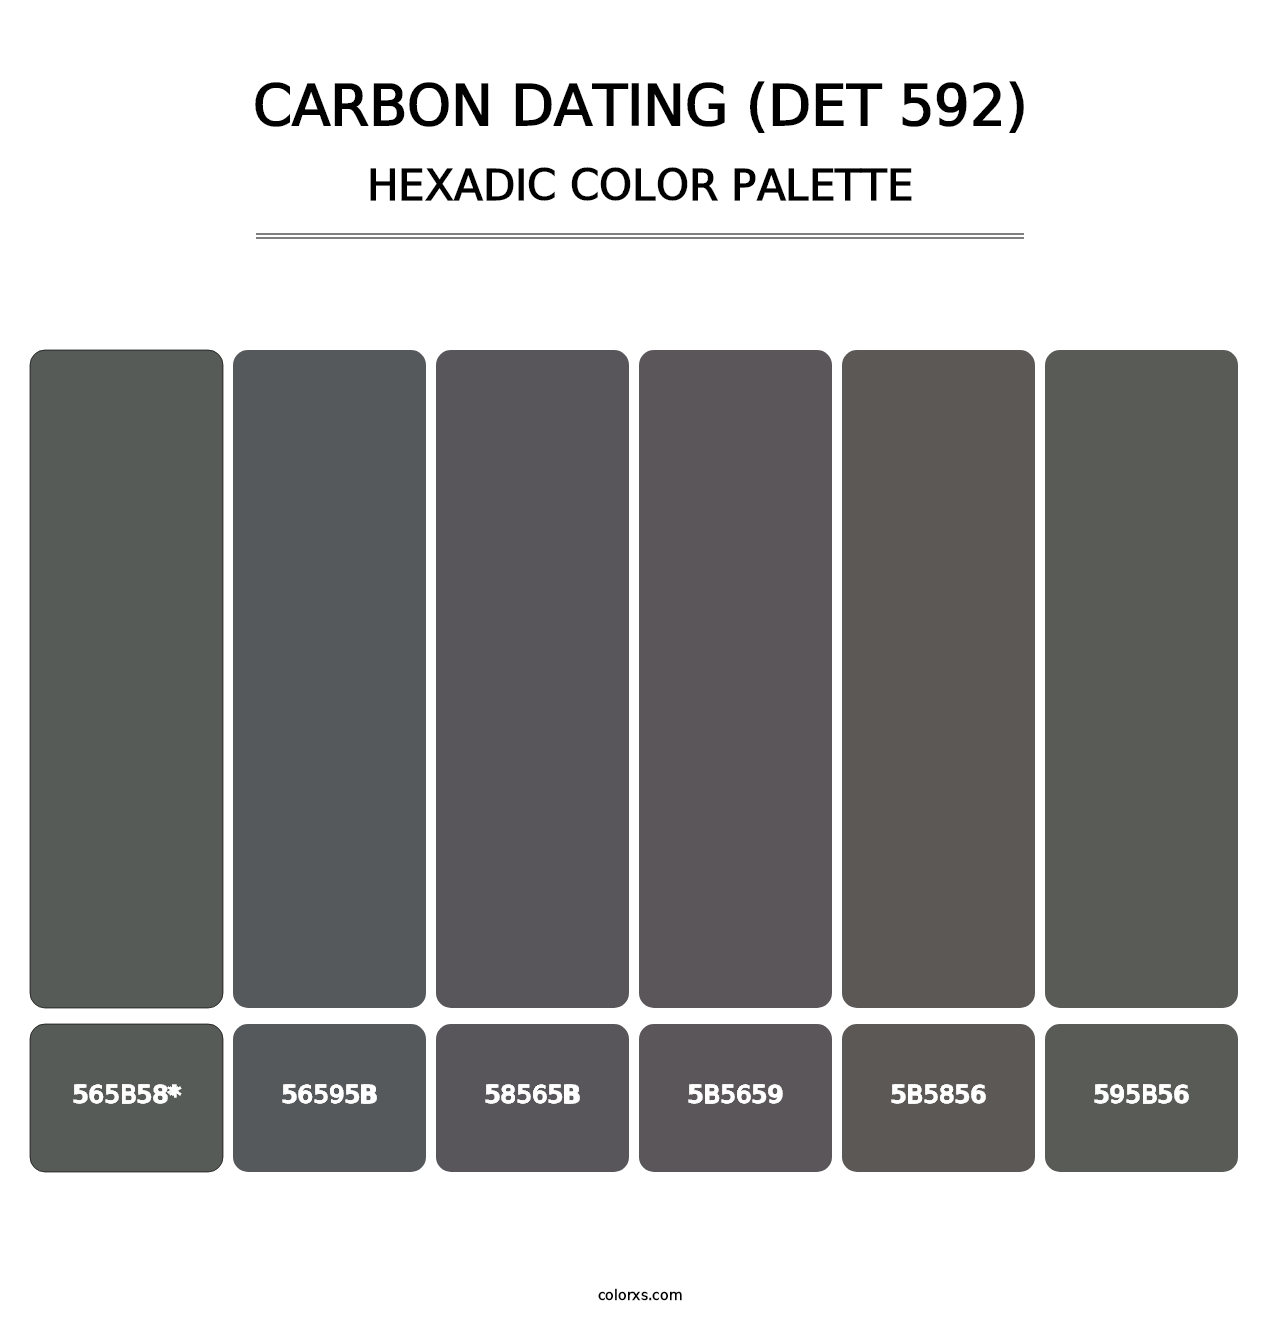 Carbon Dating (DET 592) - Hexadic Color Palette